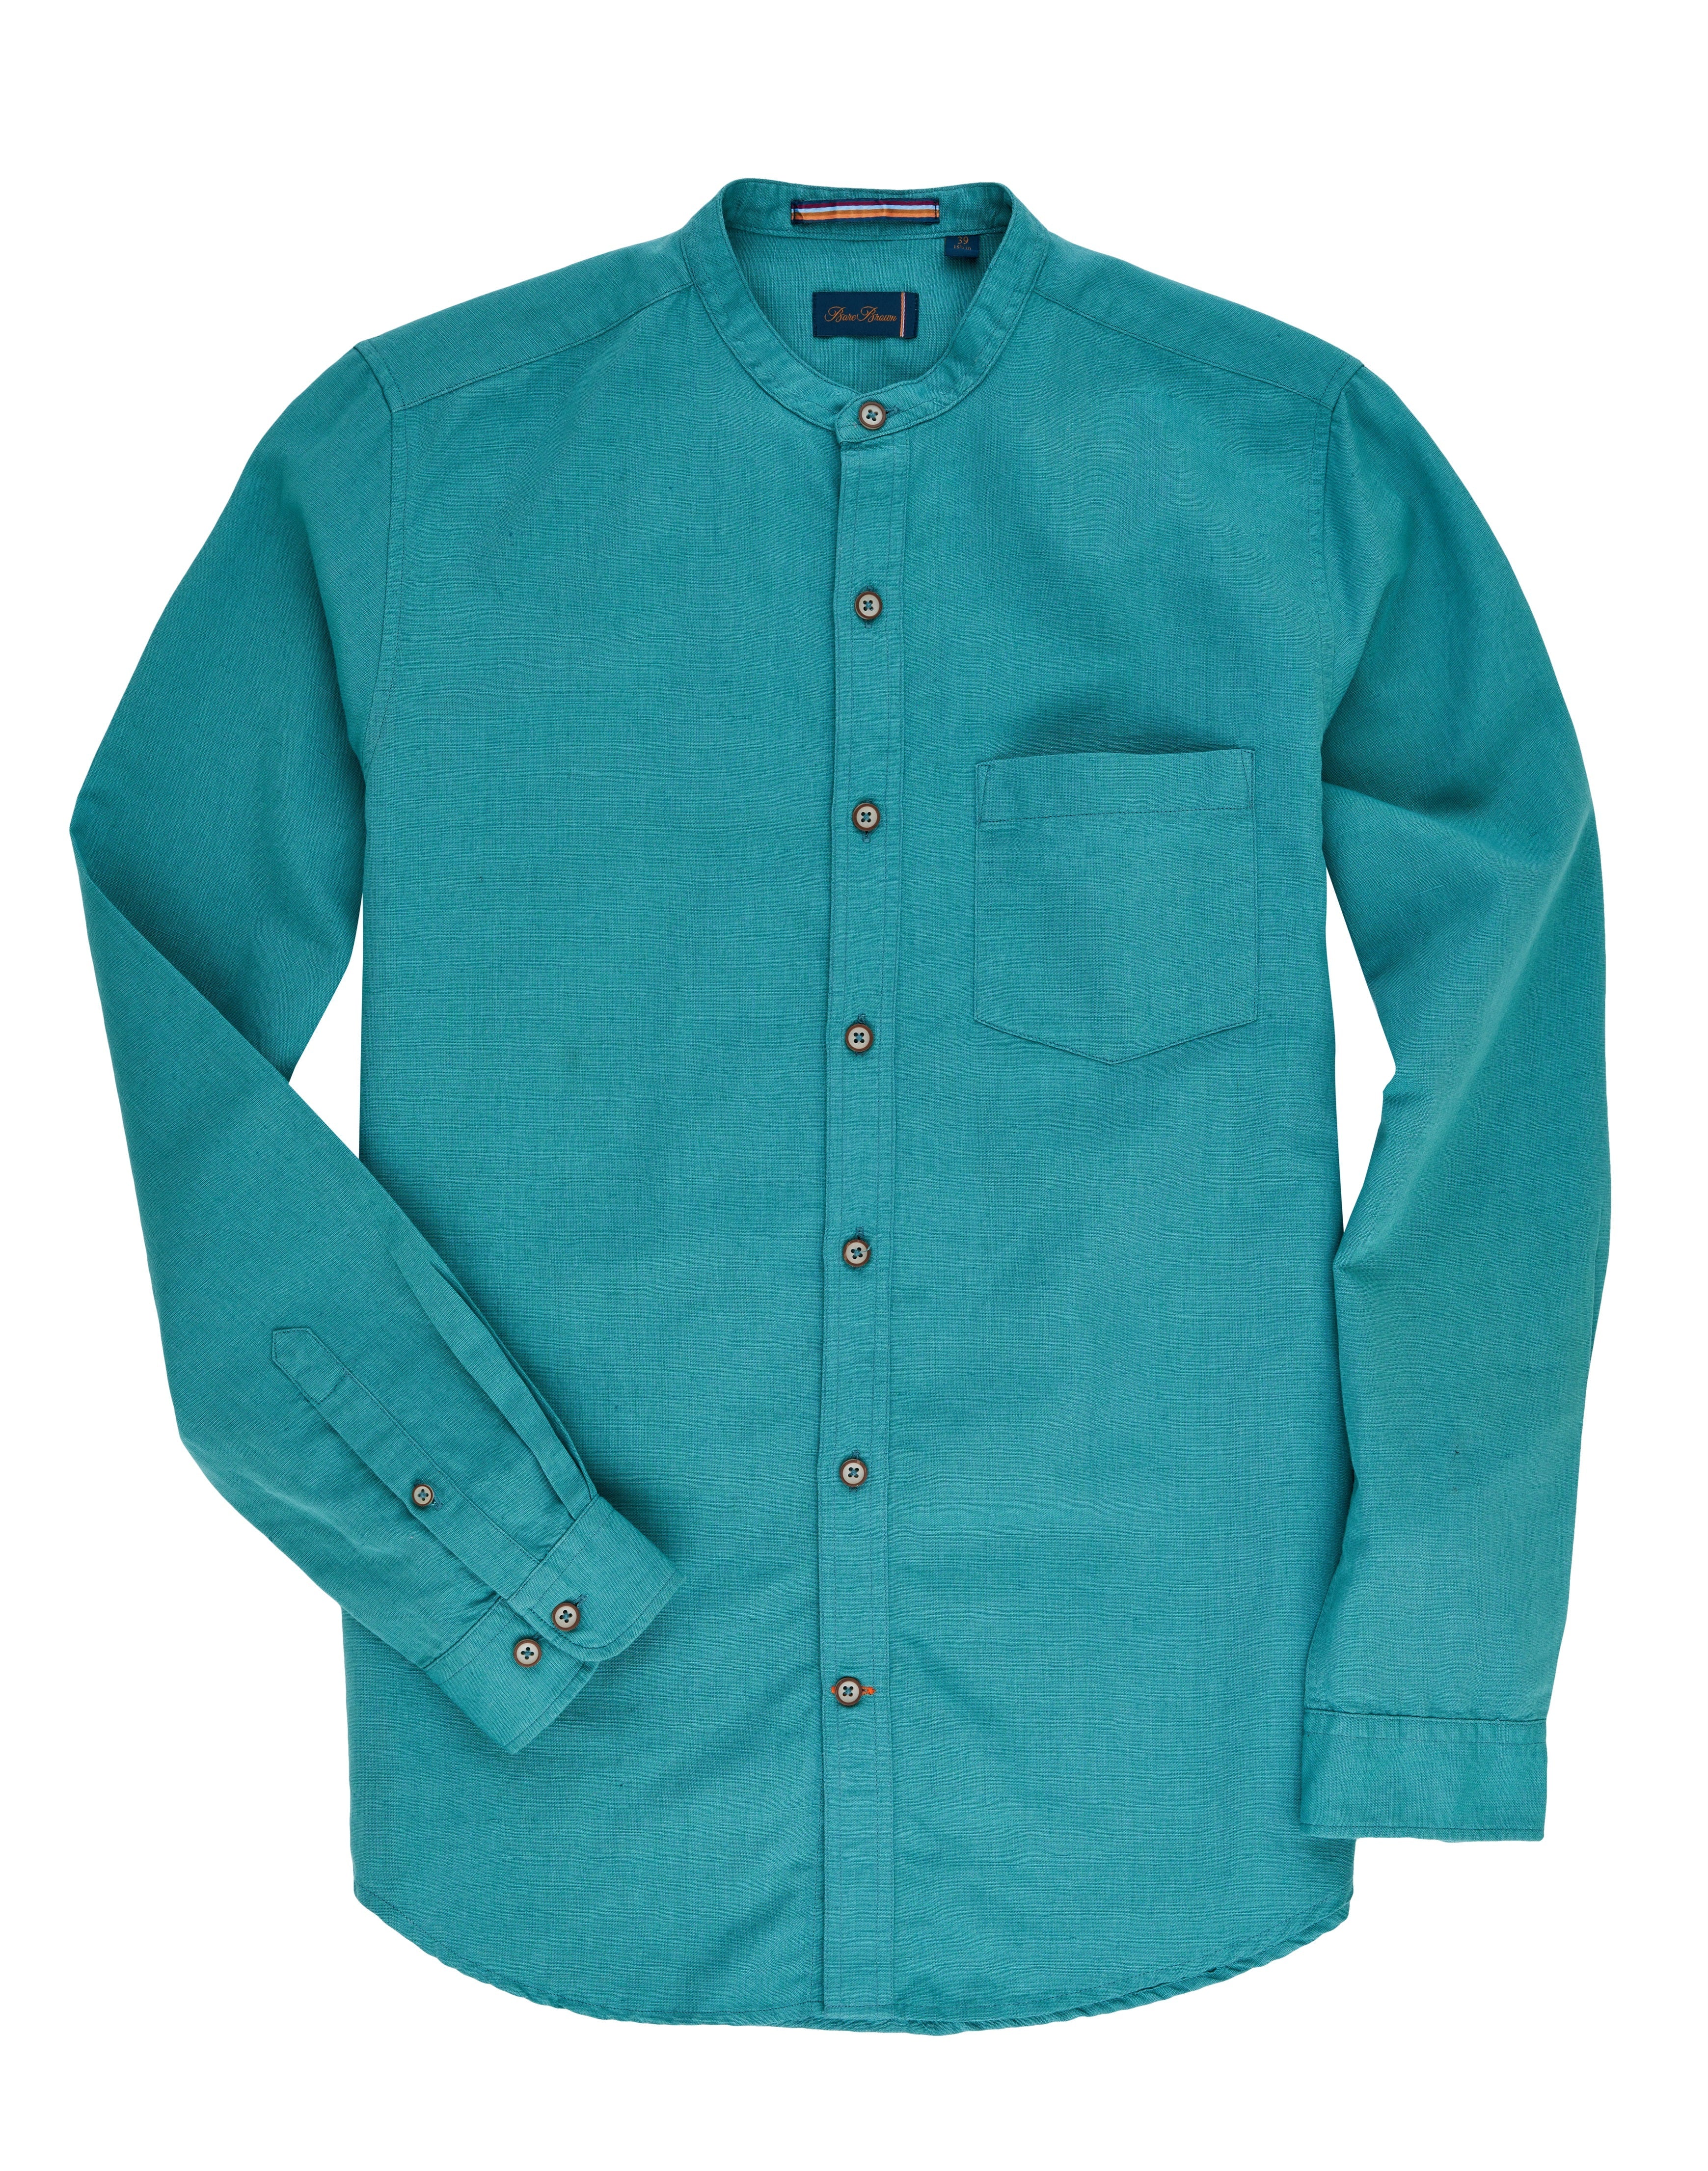 Bare Brown Mandarin Collar Cotton Linen Shirt, Slim Fit with Full Sleeves - Aqua